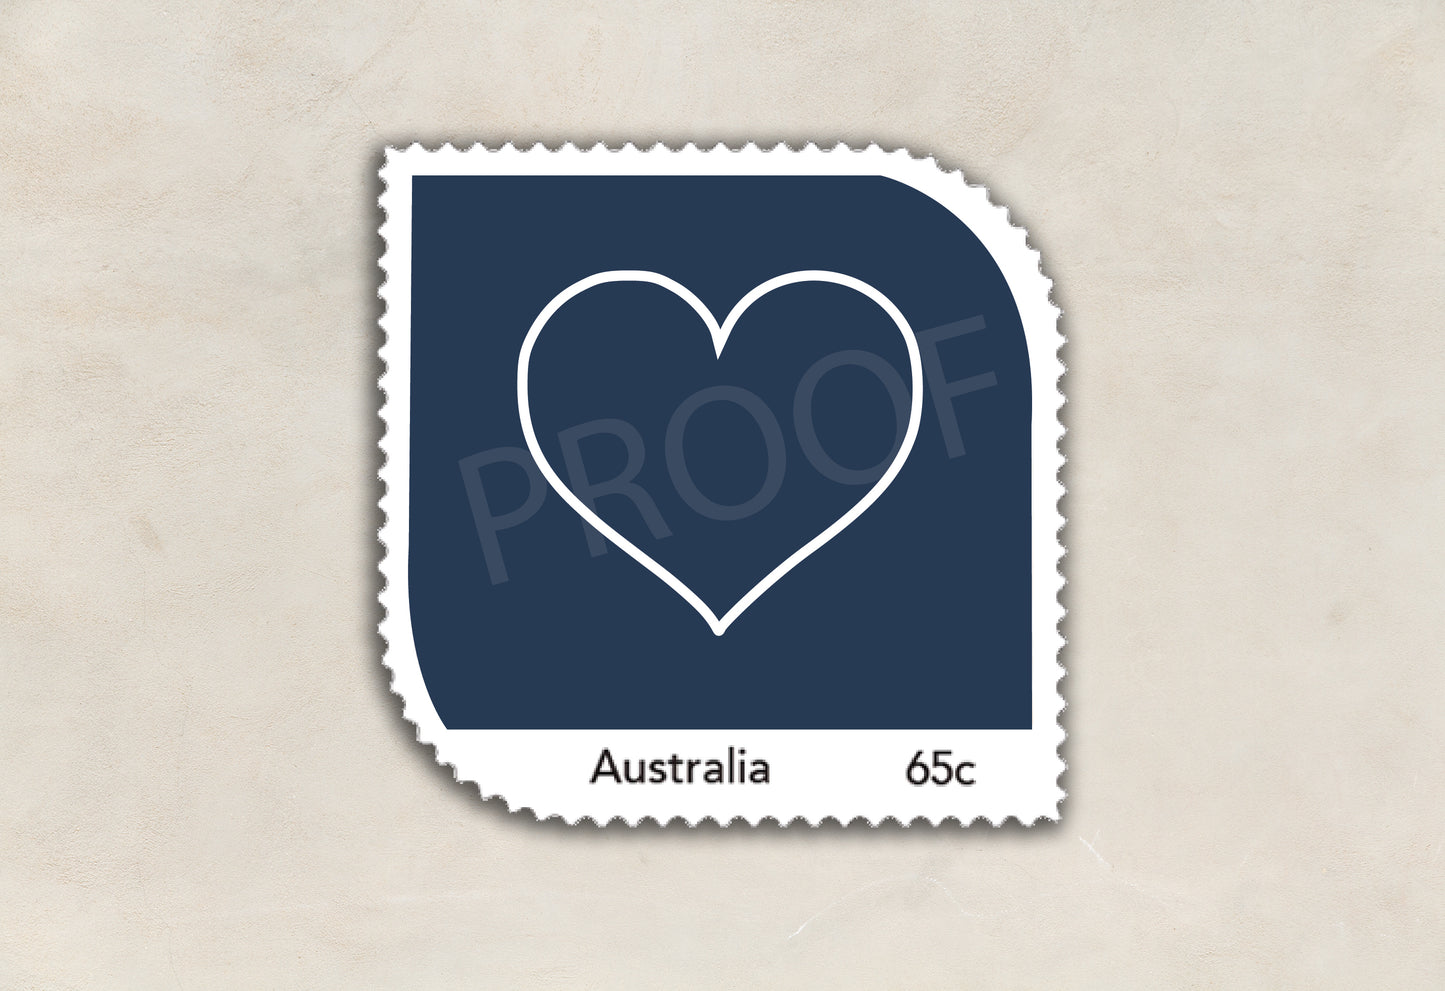 All My Love Stamp Design